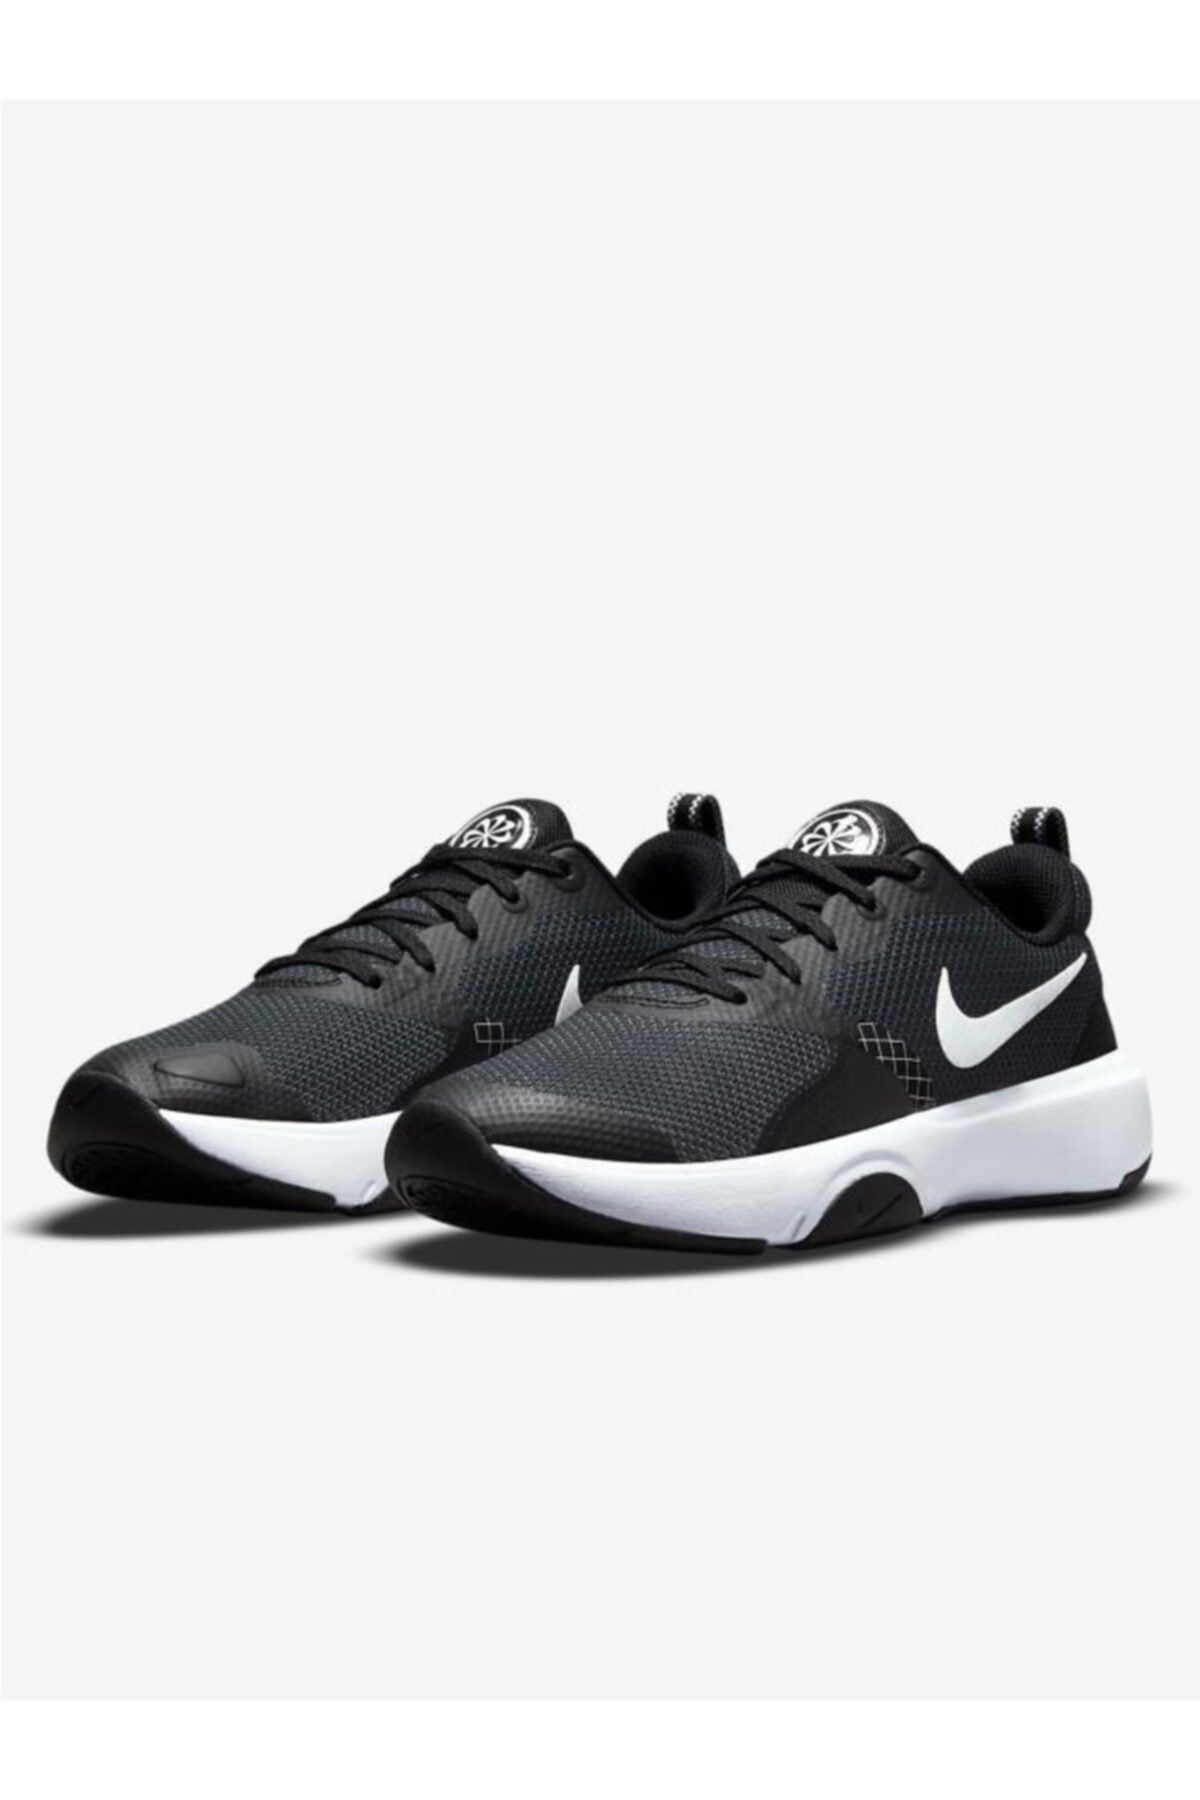 Nike Da1351 002 Cıty Rep Tr Unısex Spor Ayakkabı Siyah-gri 36-40 - Stilim Spor